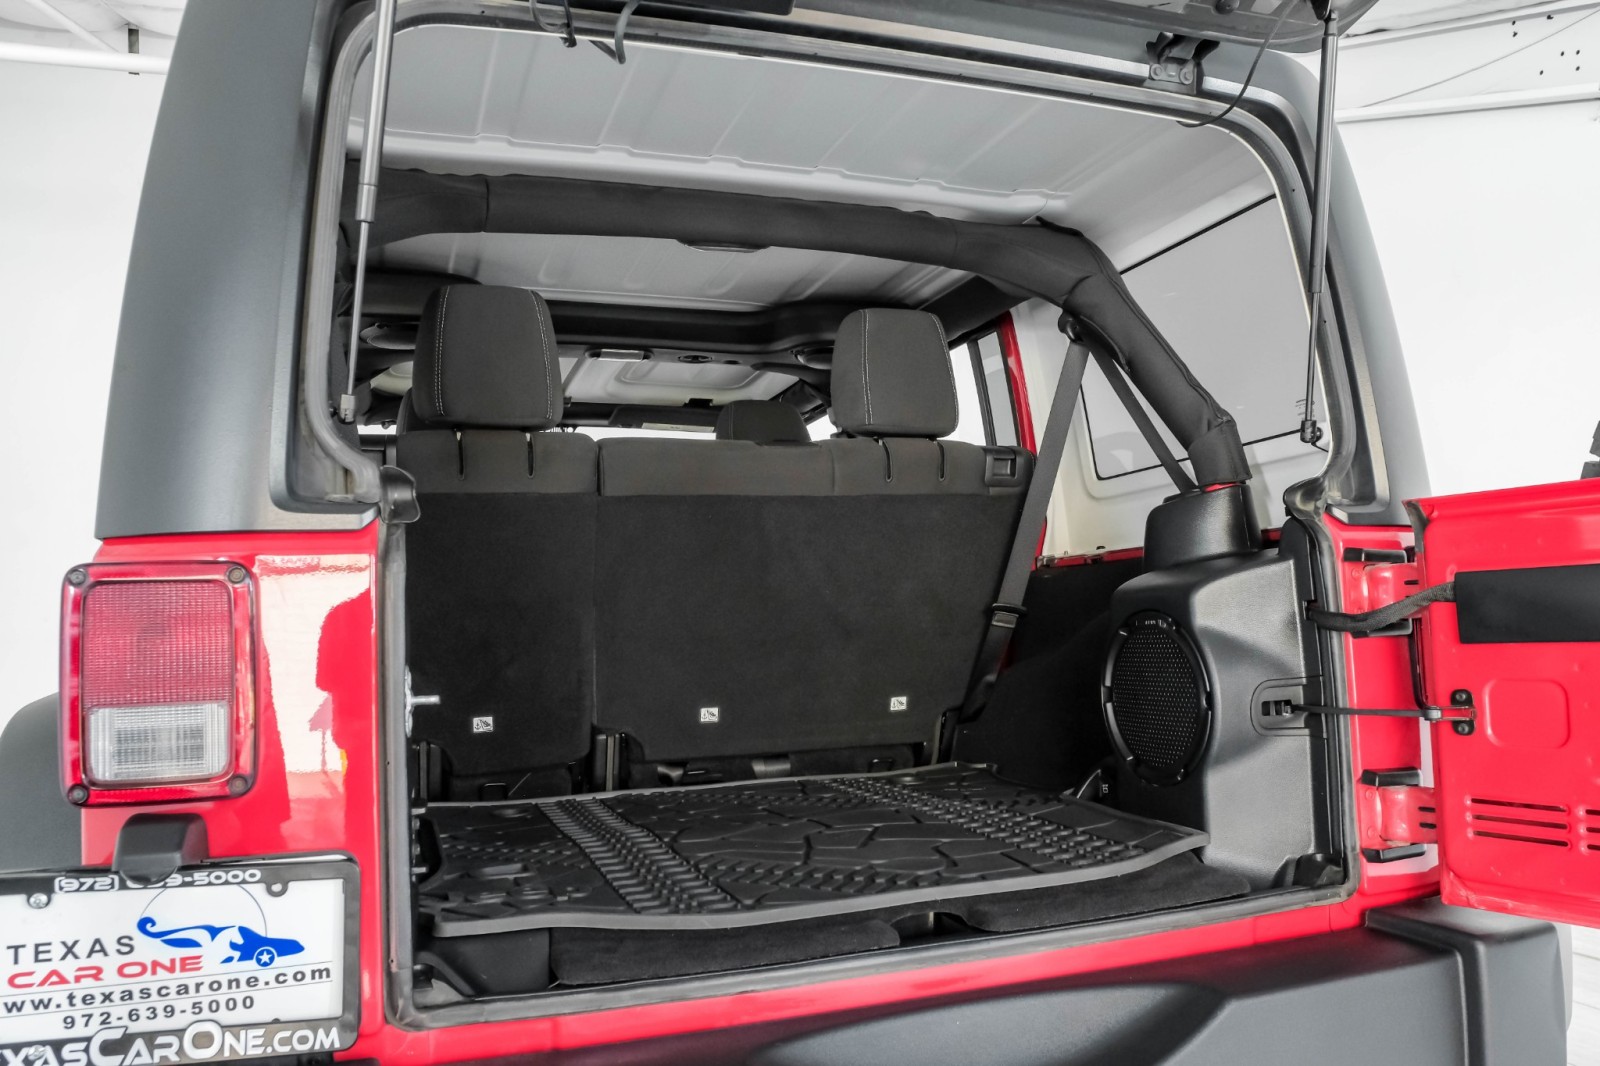 2014 Jeep Wrangler UNLIMITED RUBICON 4WD AUTOMATIC HARD TOP CONVERTIB 44